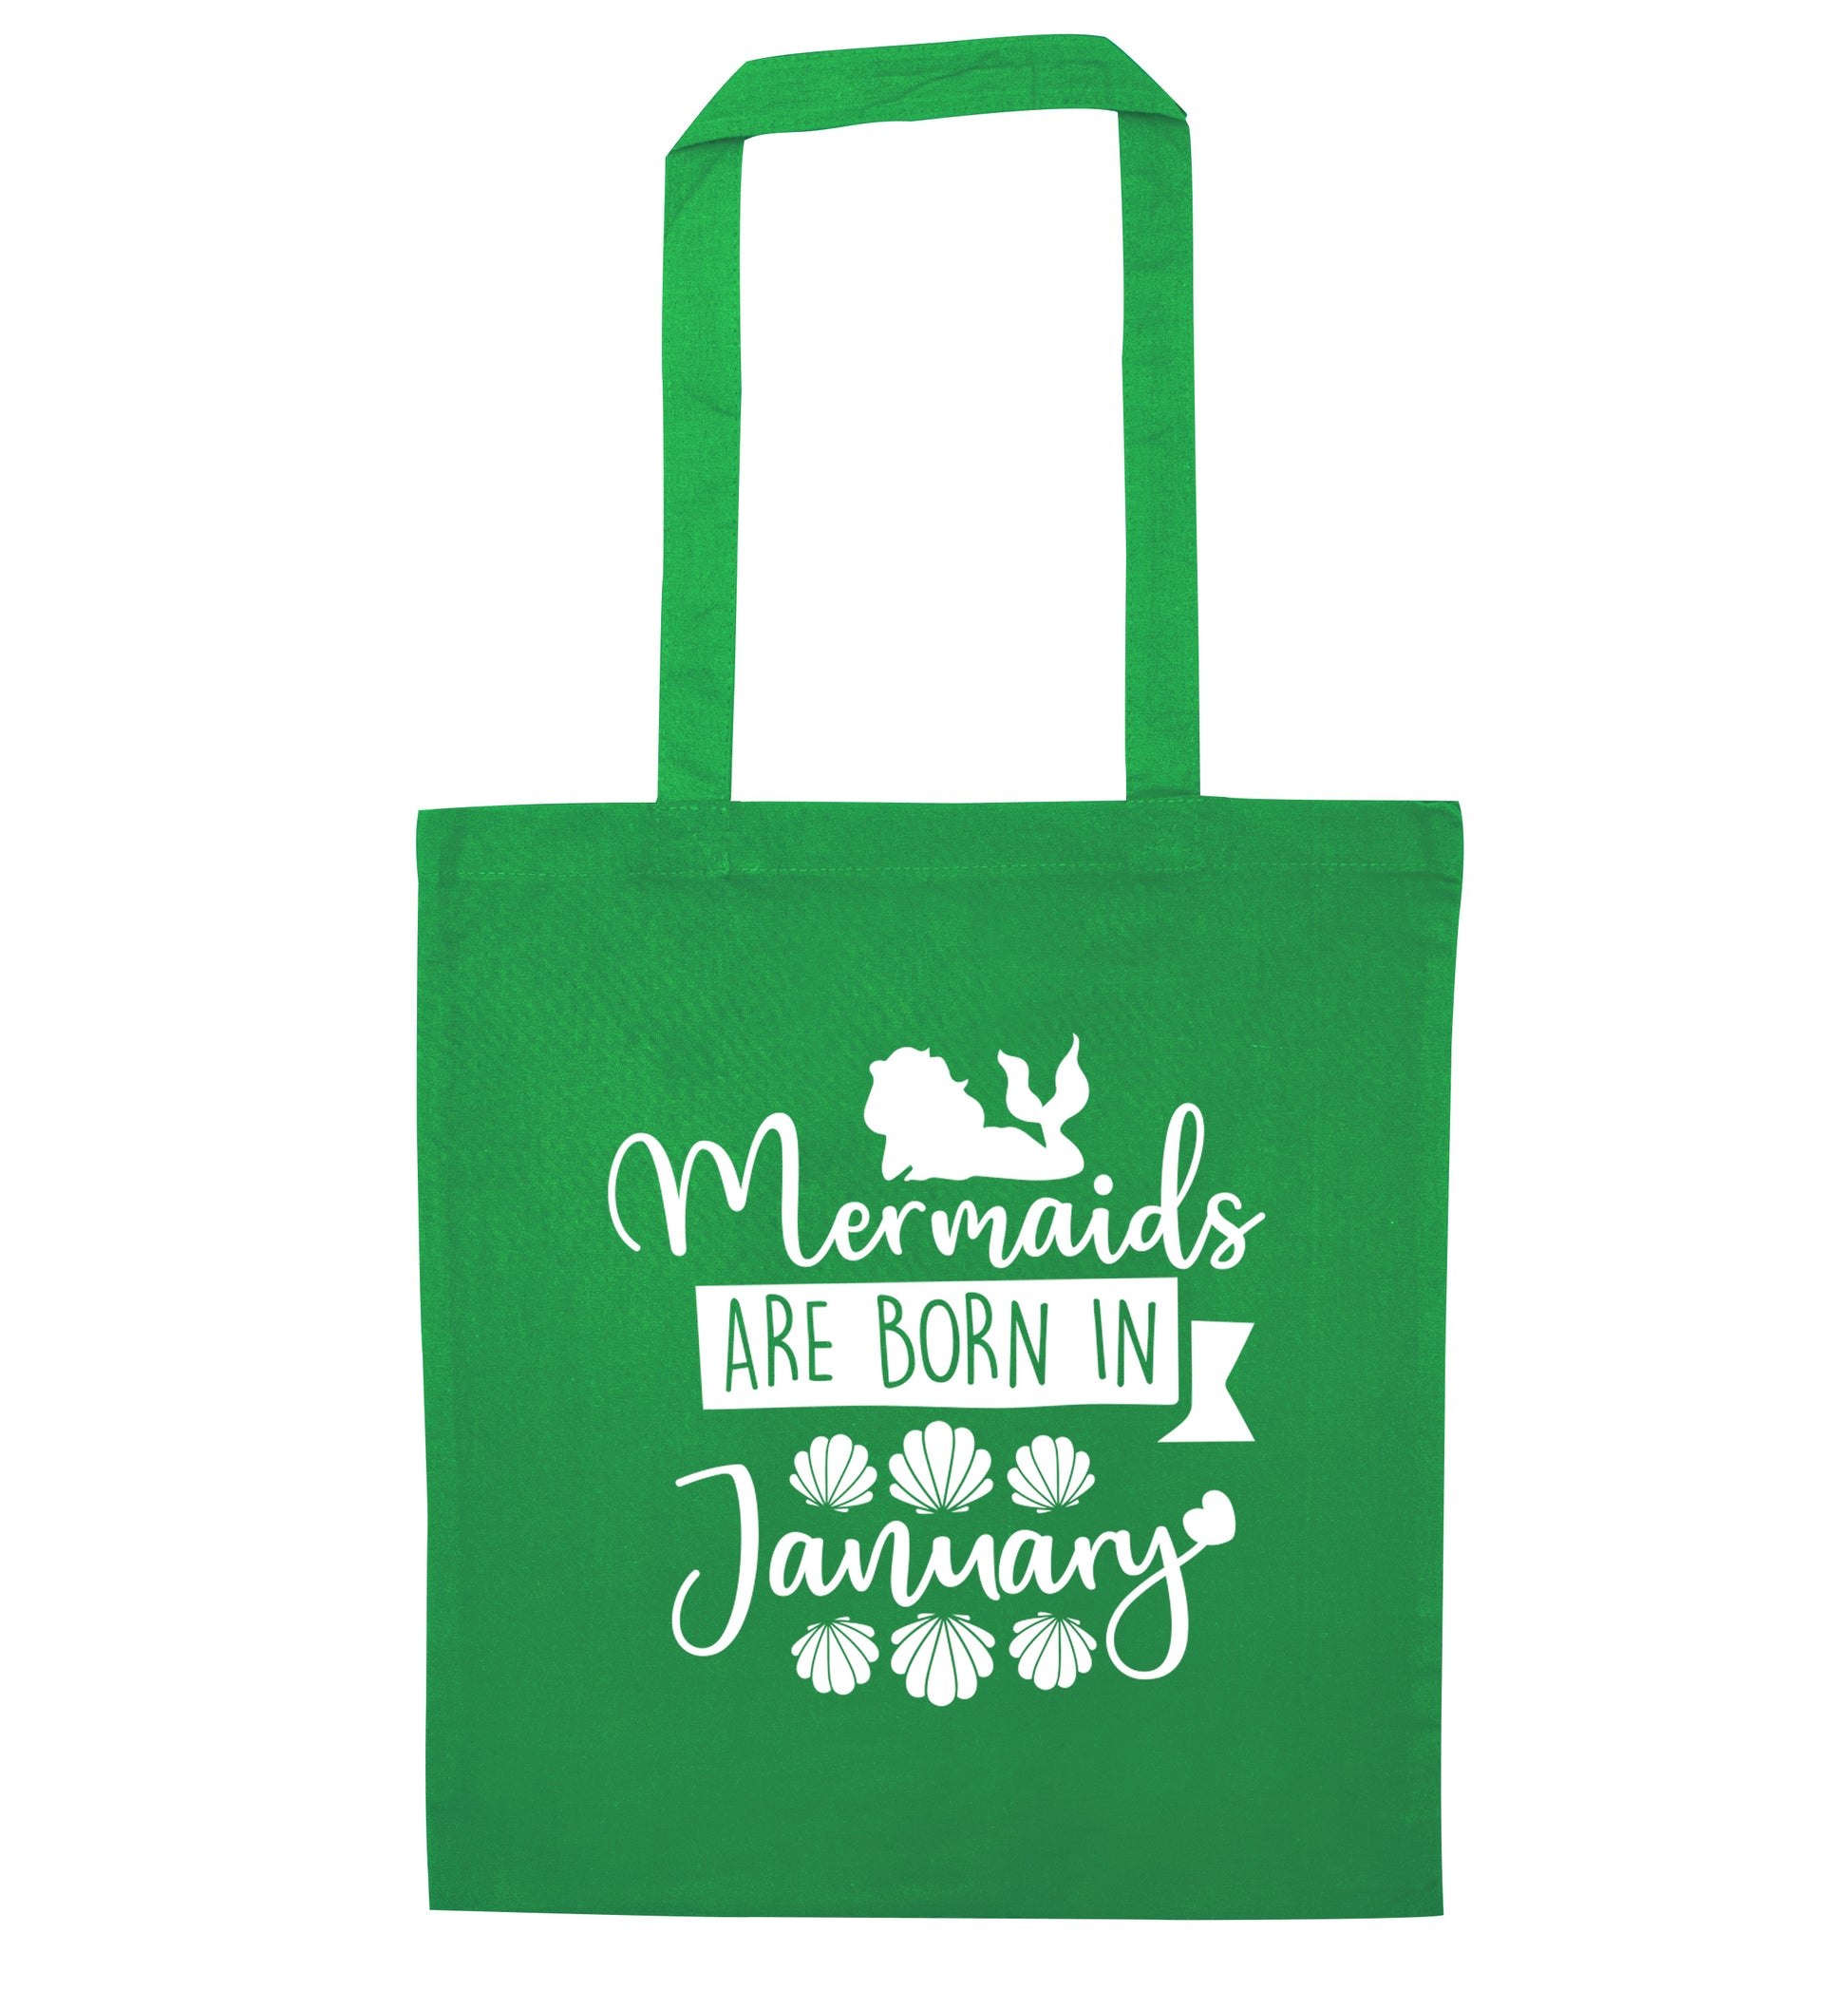 Mermaids are born in January green tote bag